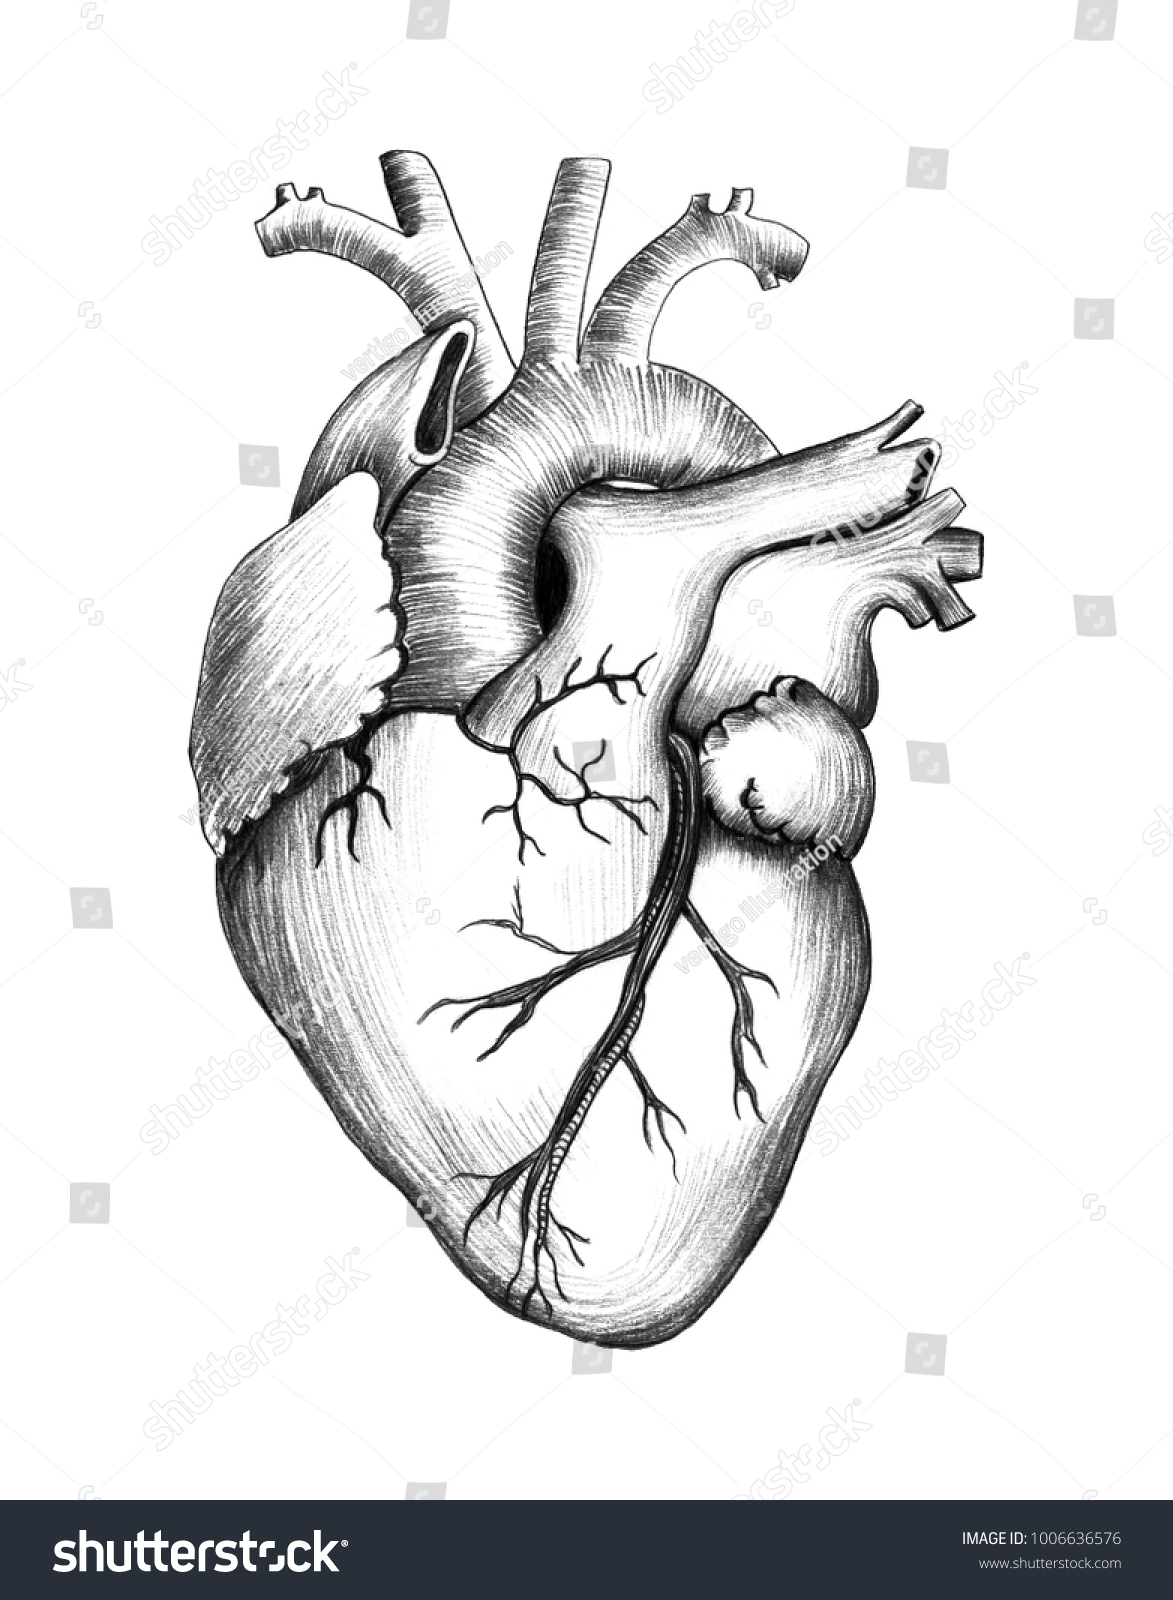 Human Heart Pencil Drawing bestpencildrawing